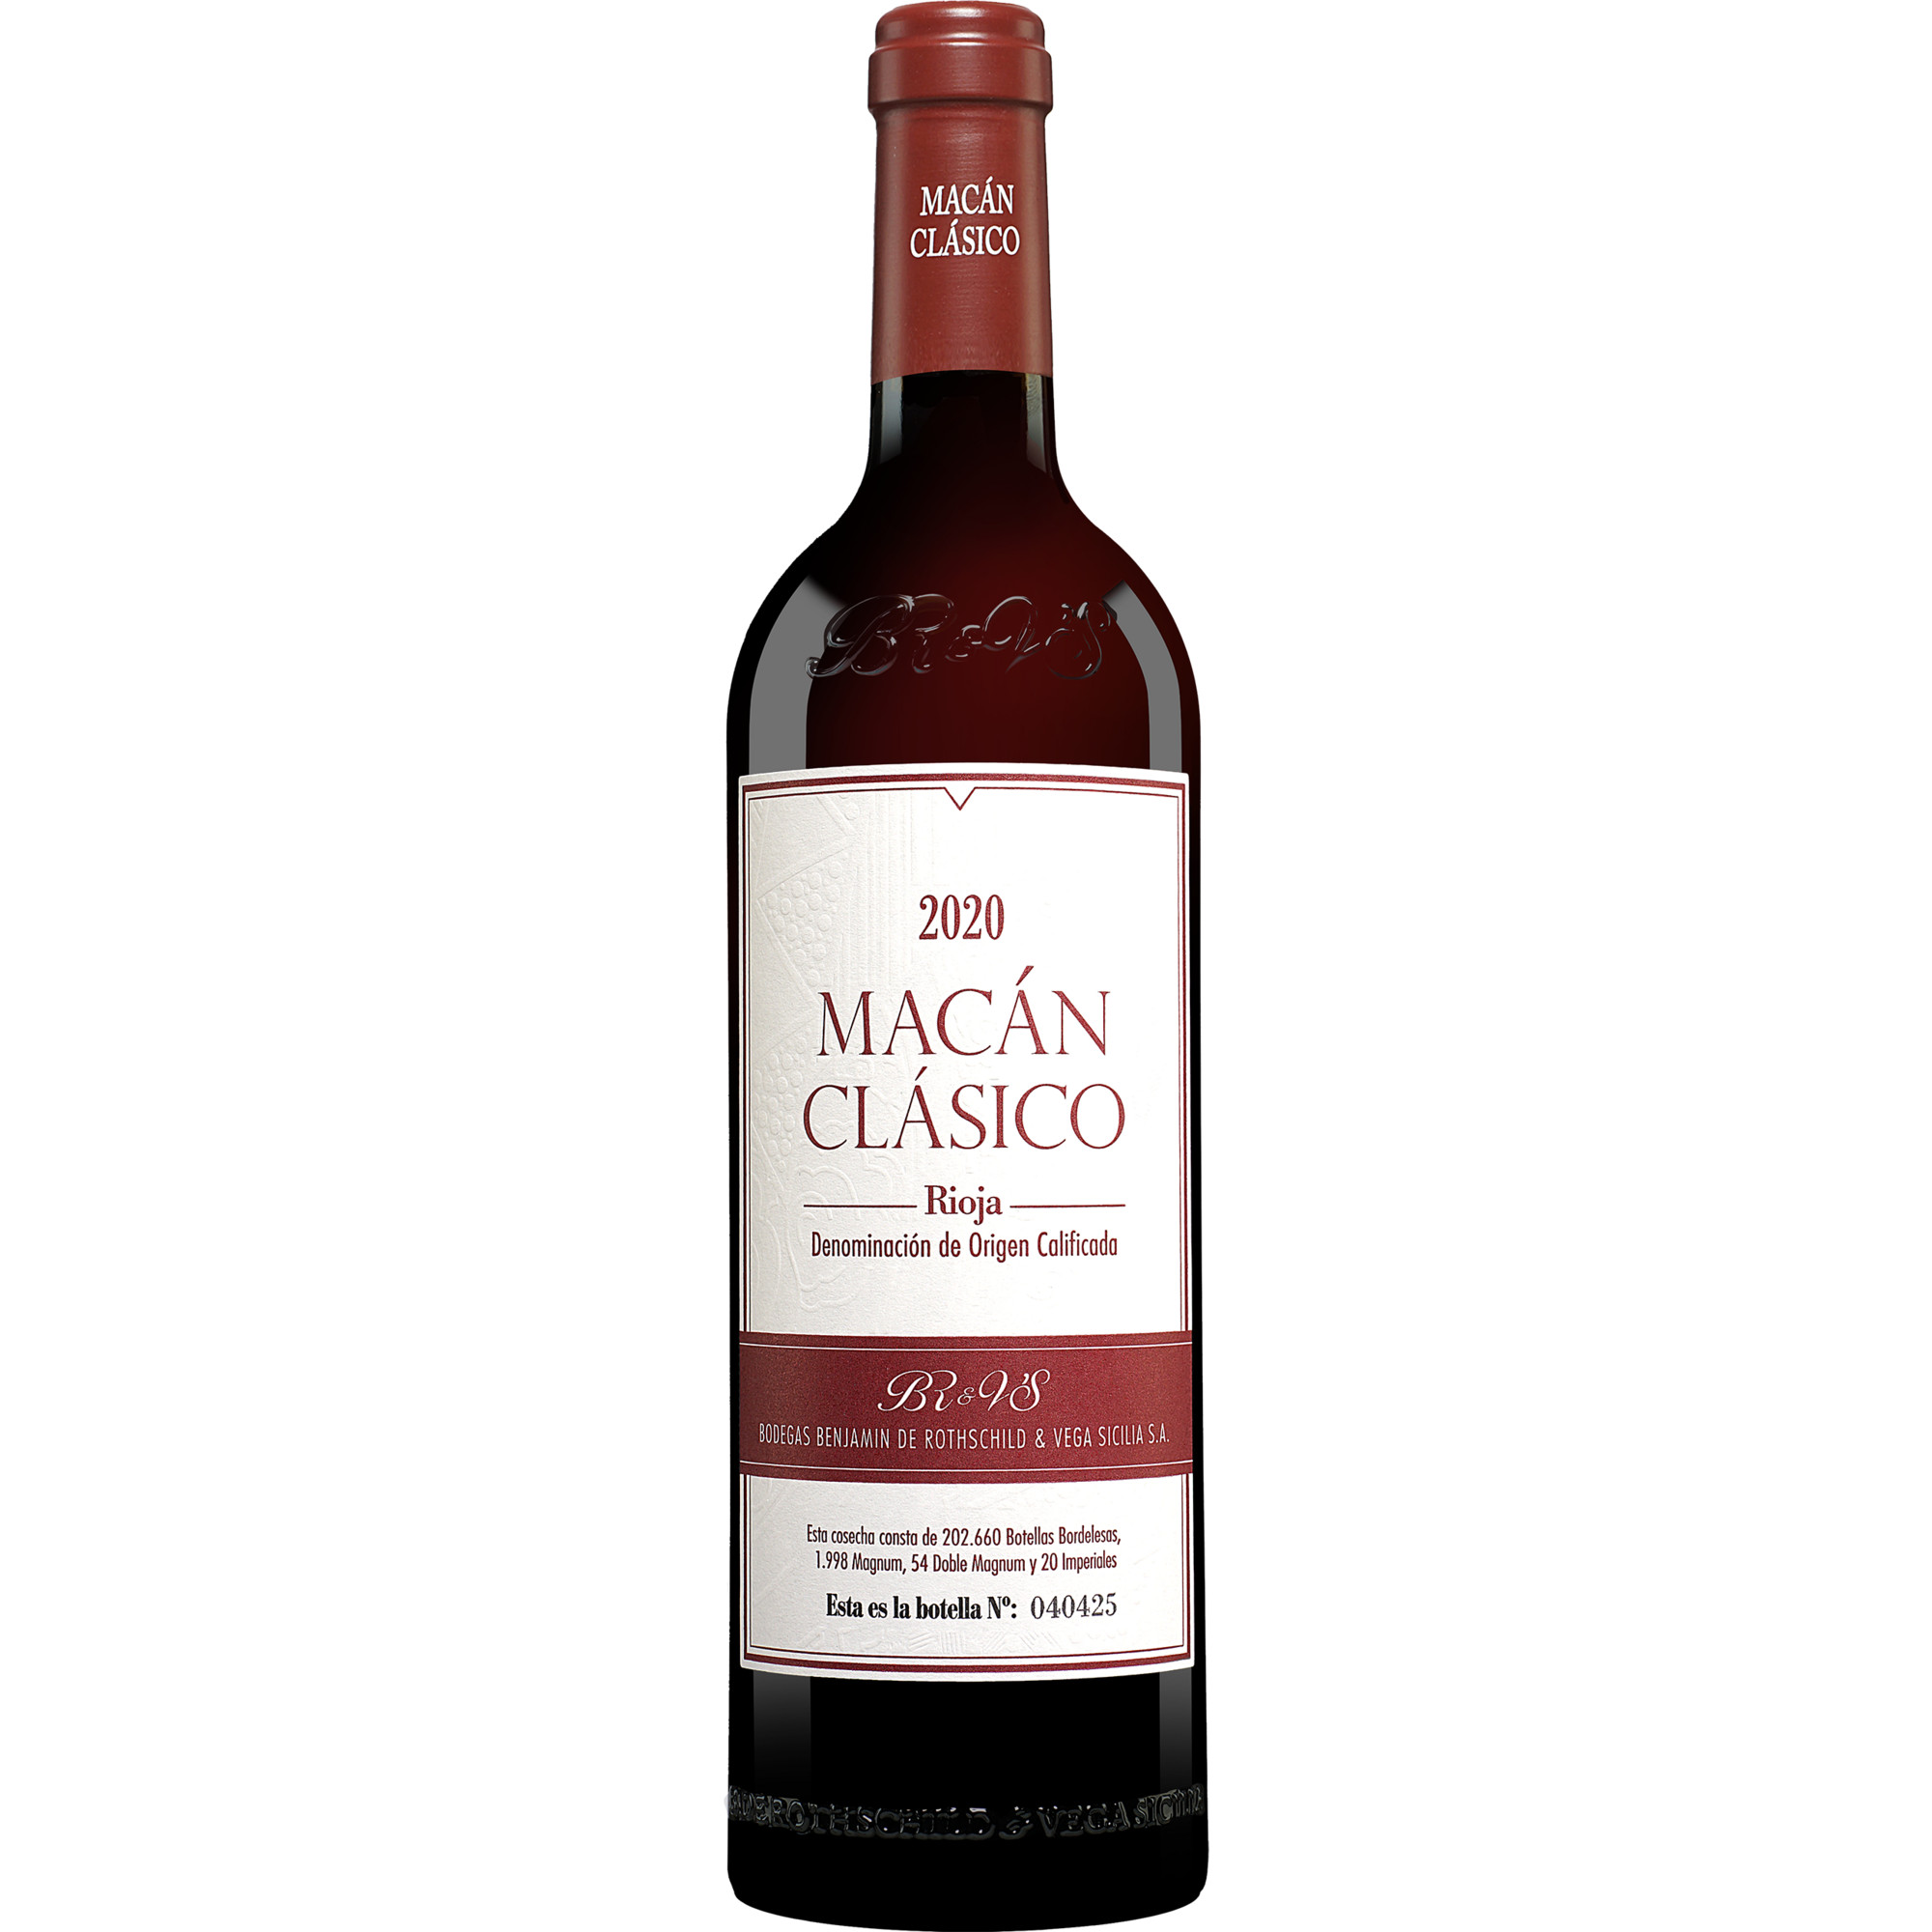 Vega Sicilia »Macán Clásico« 2020  014% Vol. Rotwein Trocken aus Spanien